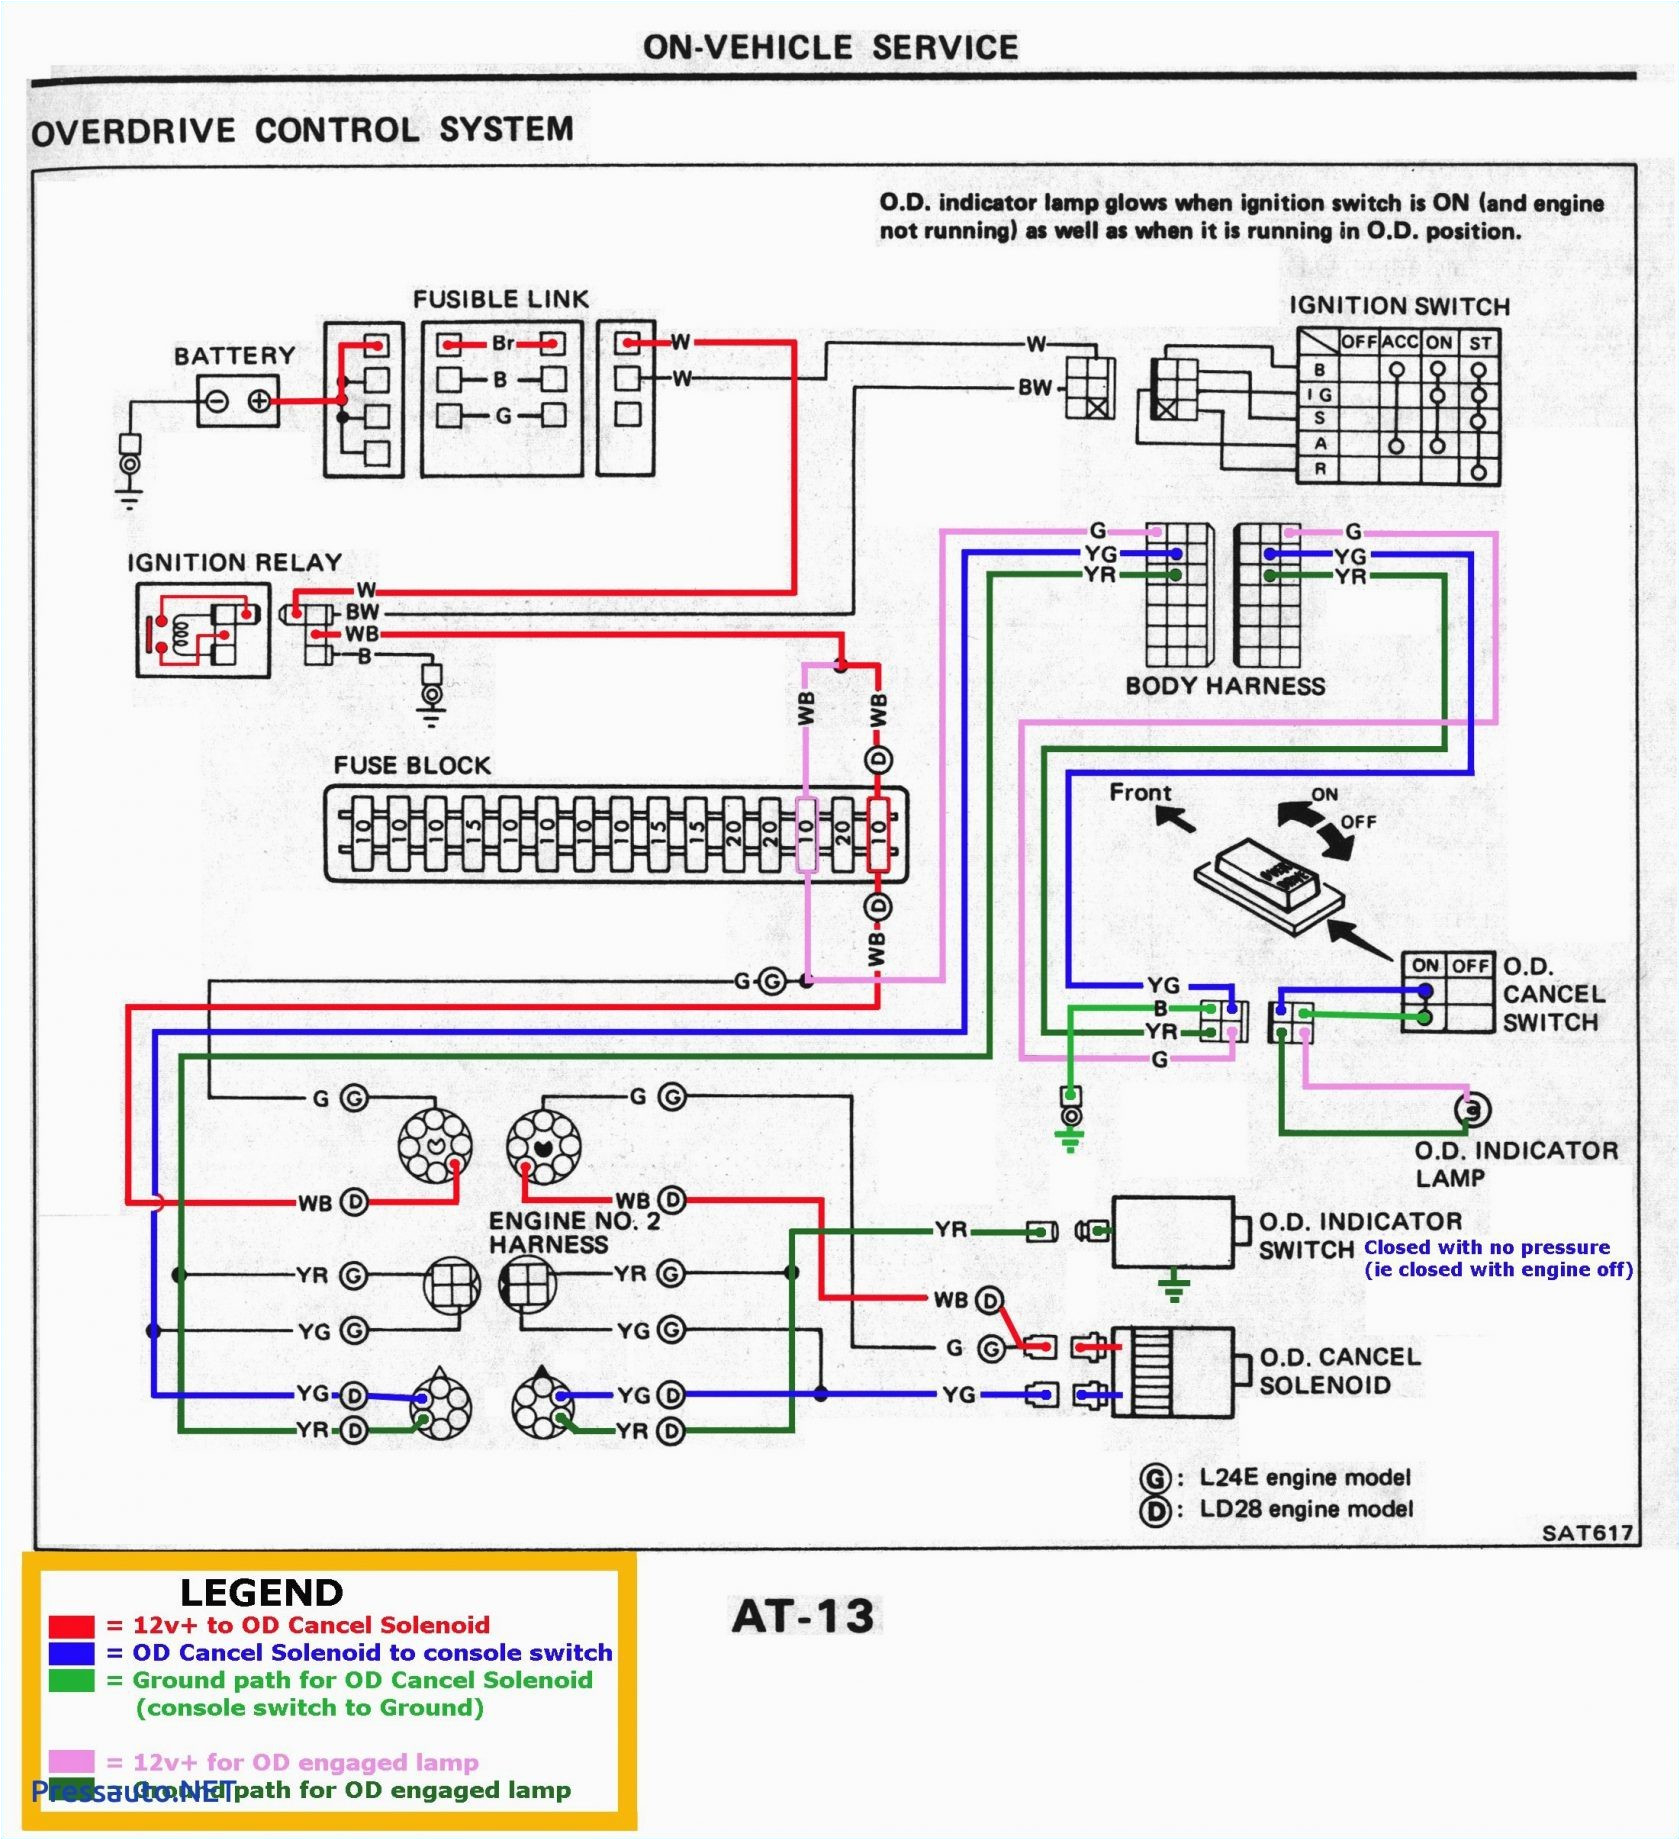 1996 nissan maxima fuse box diagram wiring diagrams konsult picture diagram of 96 maxima interior fuse panel solved